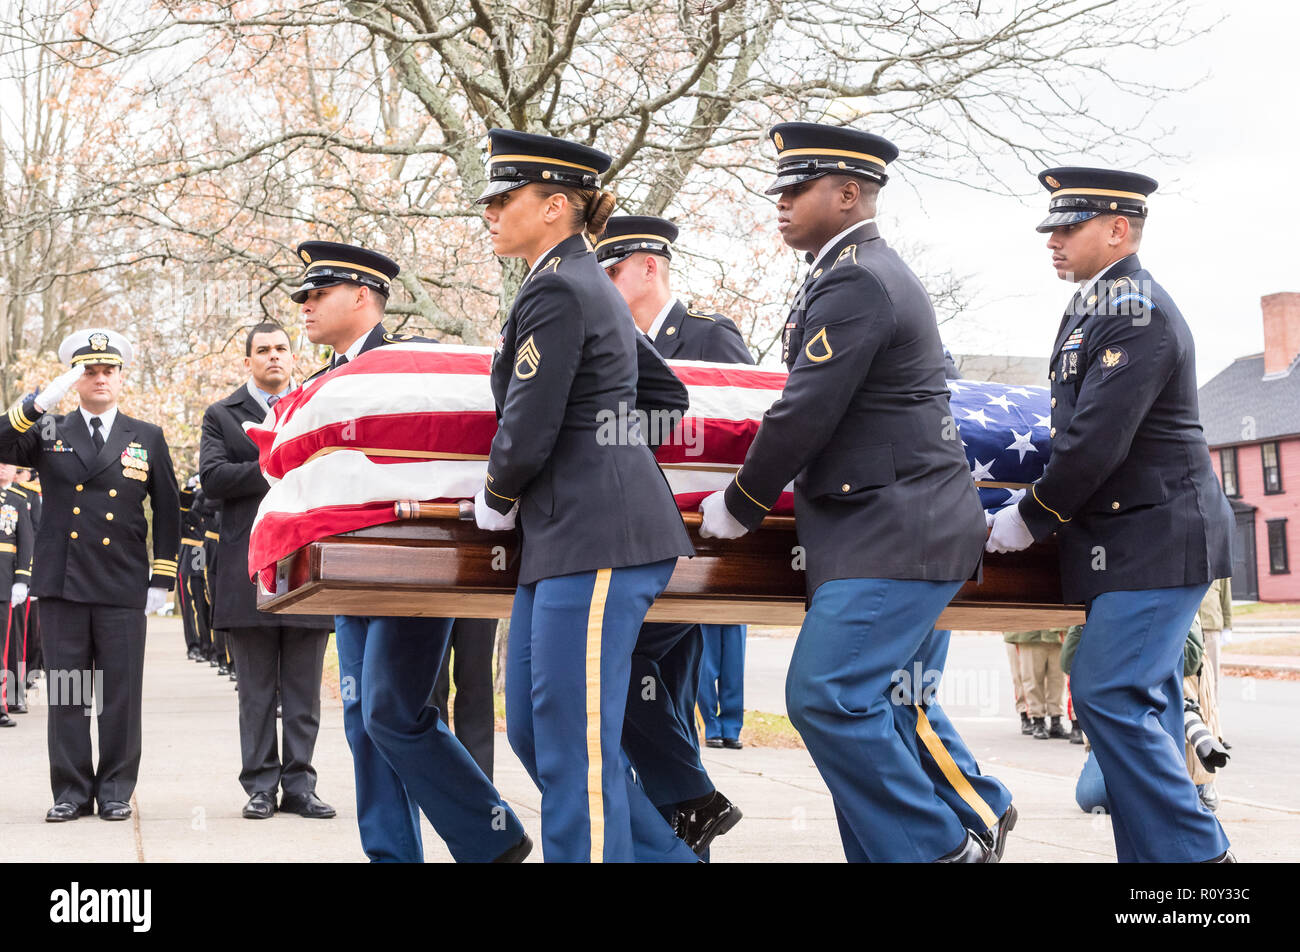 El Equipo de honor funerario Militar de la Guardia Nacional del Ejército de Massachusetts lleva el ataúd drapeado con la bandera del Capt. Thomas Hudner, ganador de la Medalla de honor. Foto de stock